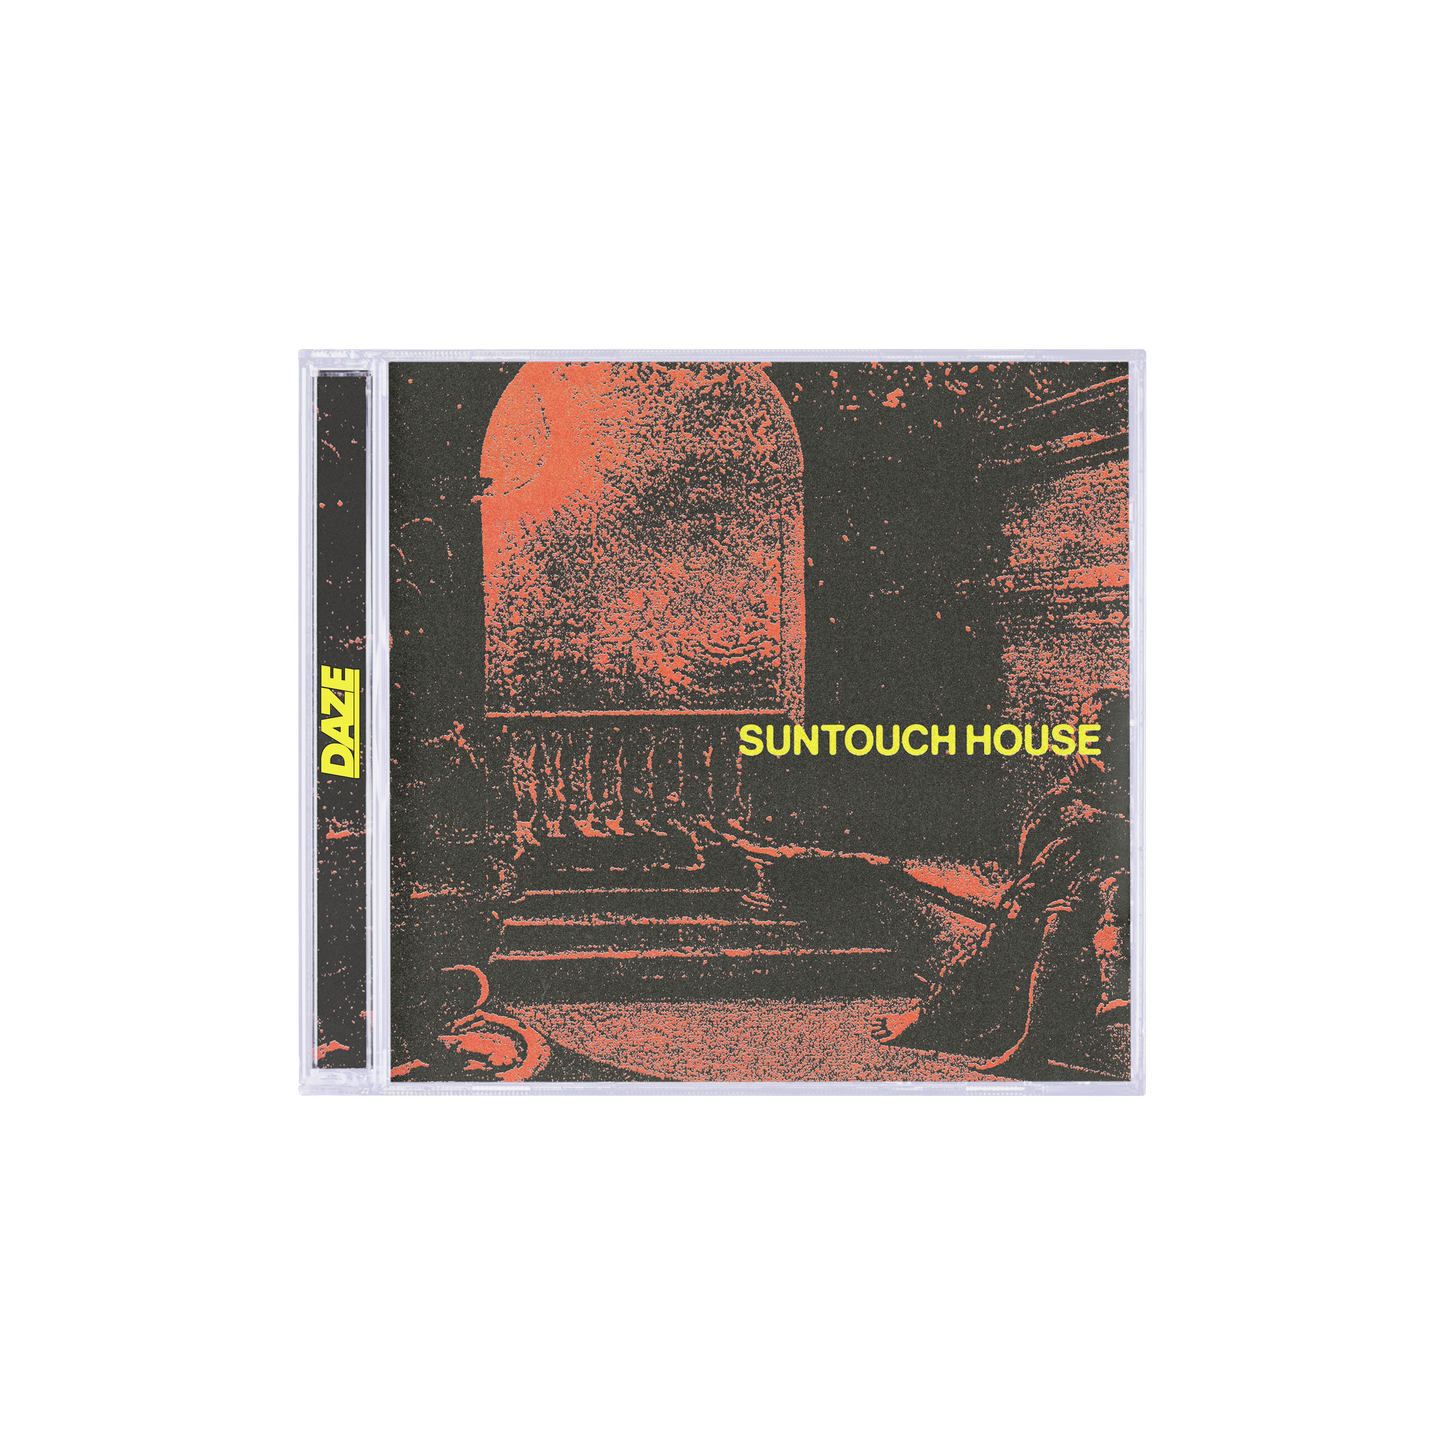 Suntouch House "Demonstrations" CD